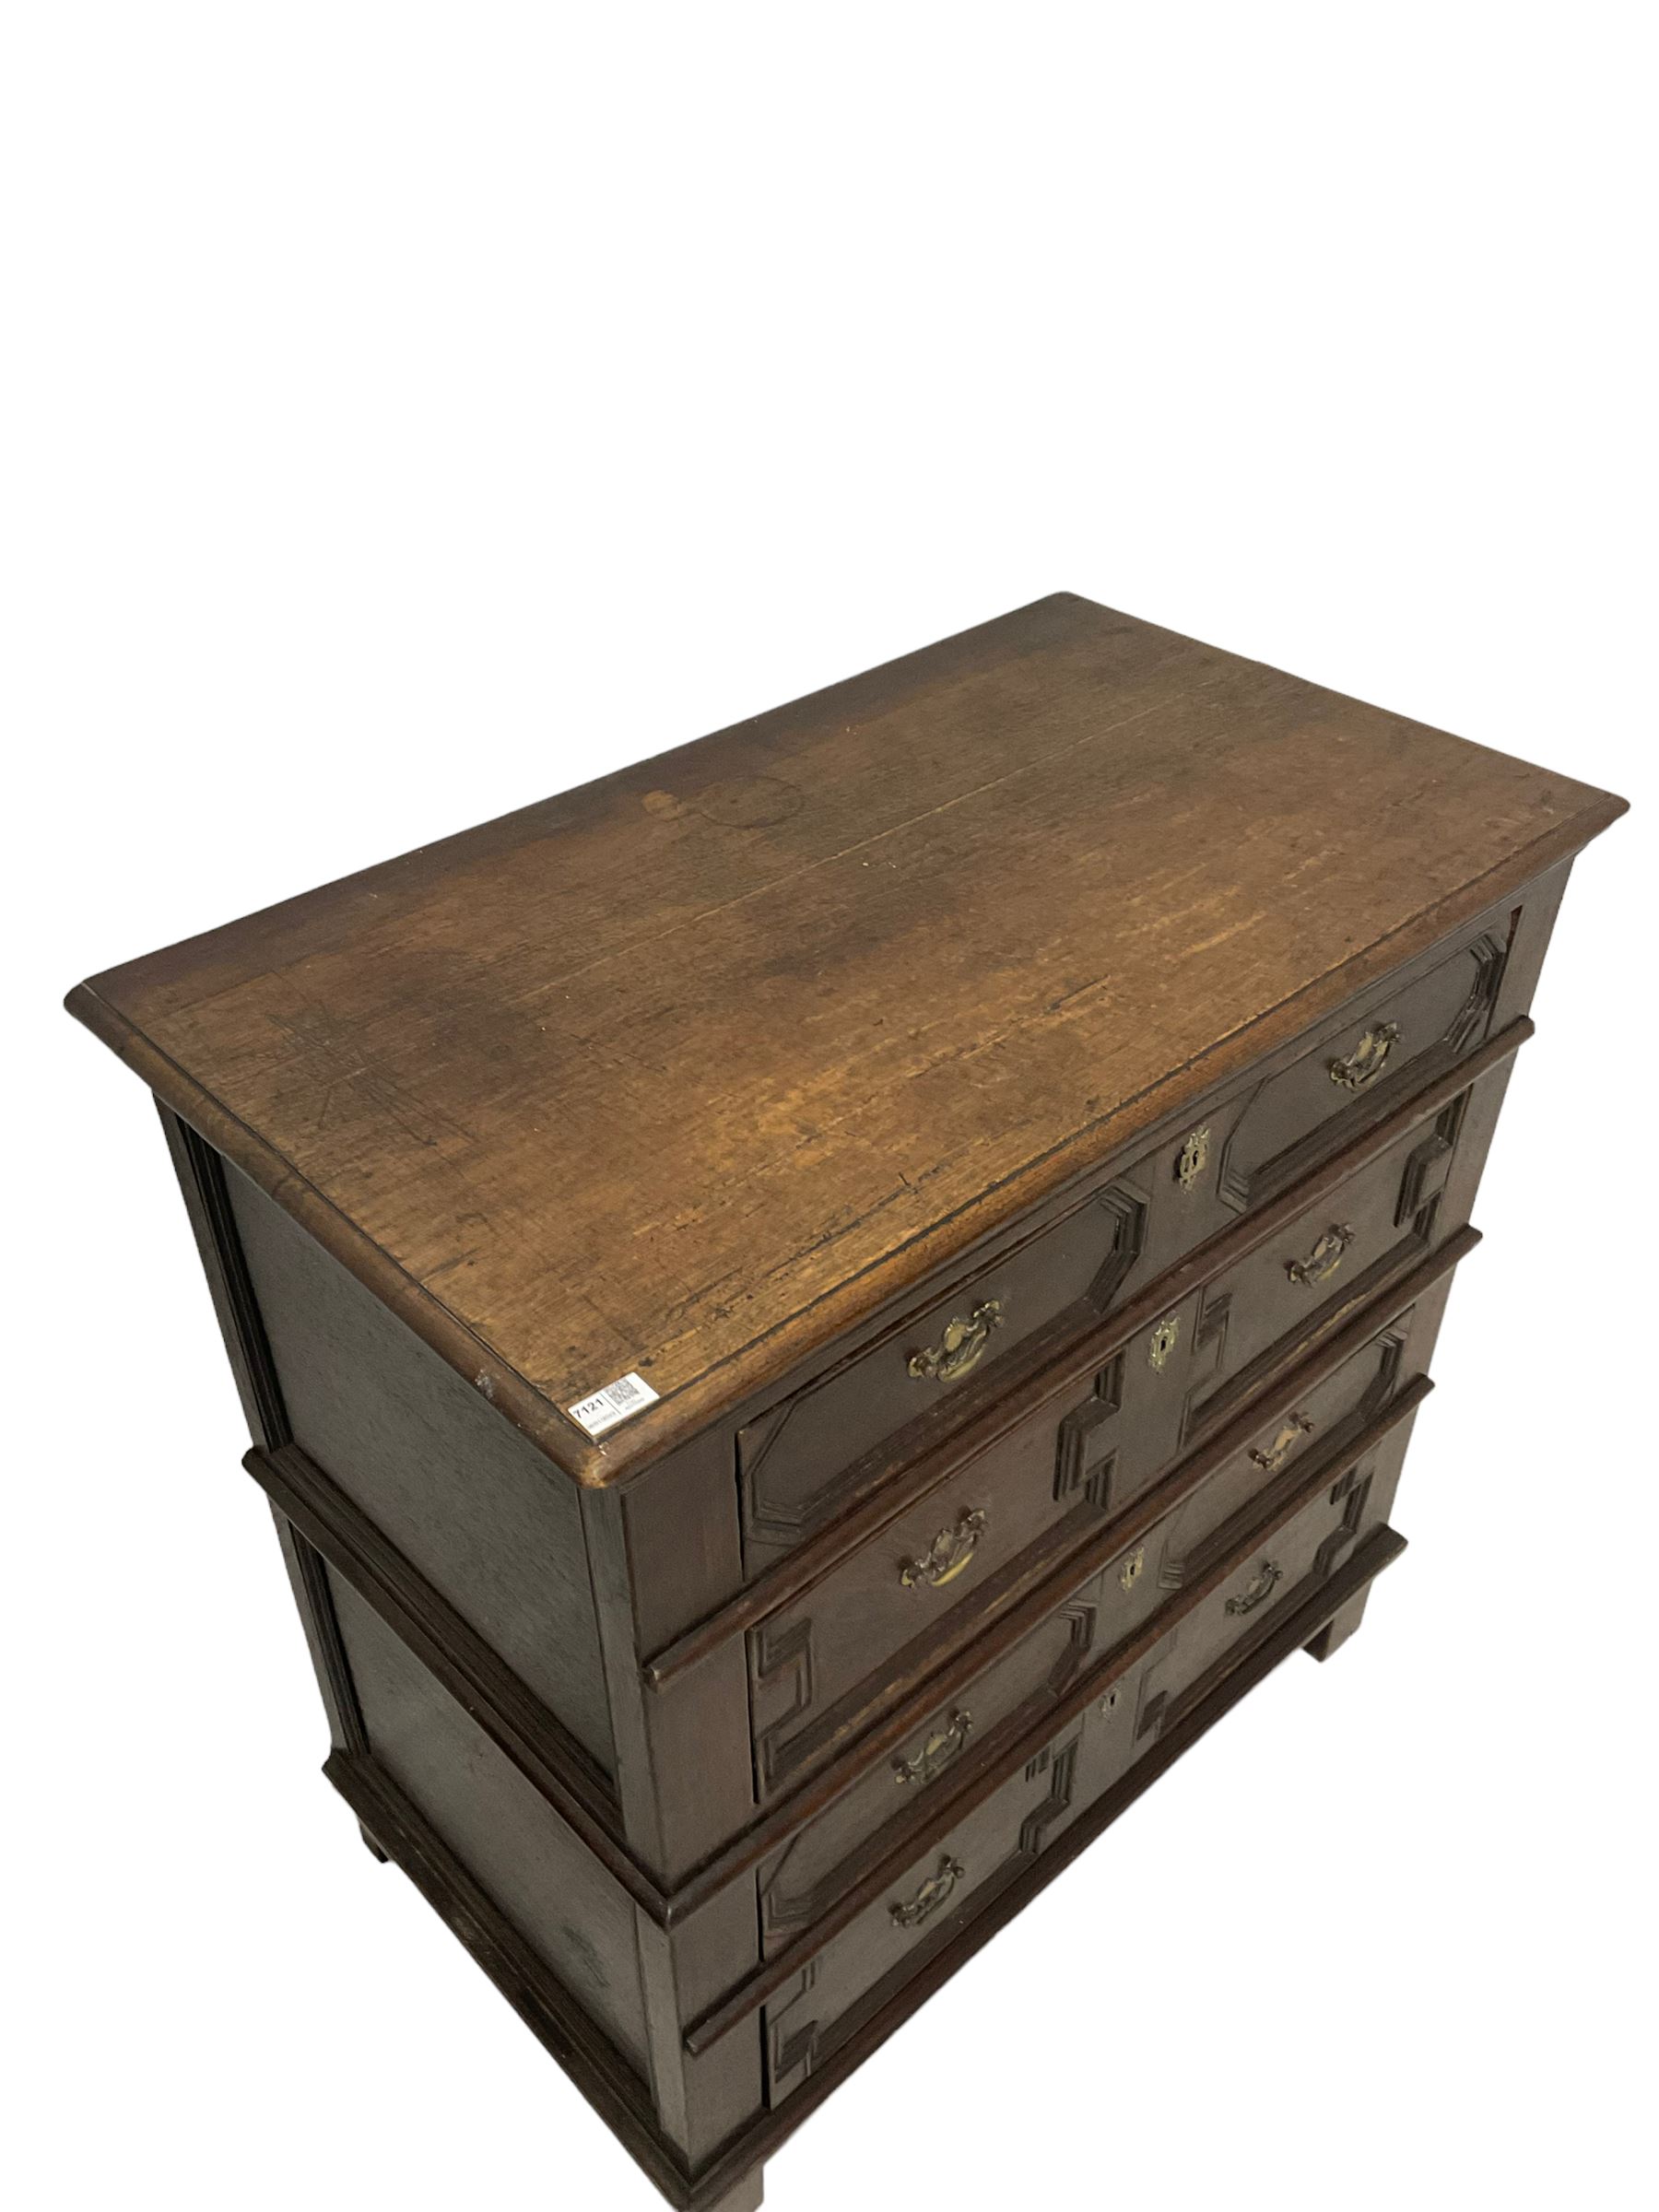 Jacobean design oak chest - Image 2 of 5